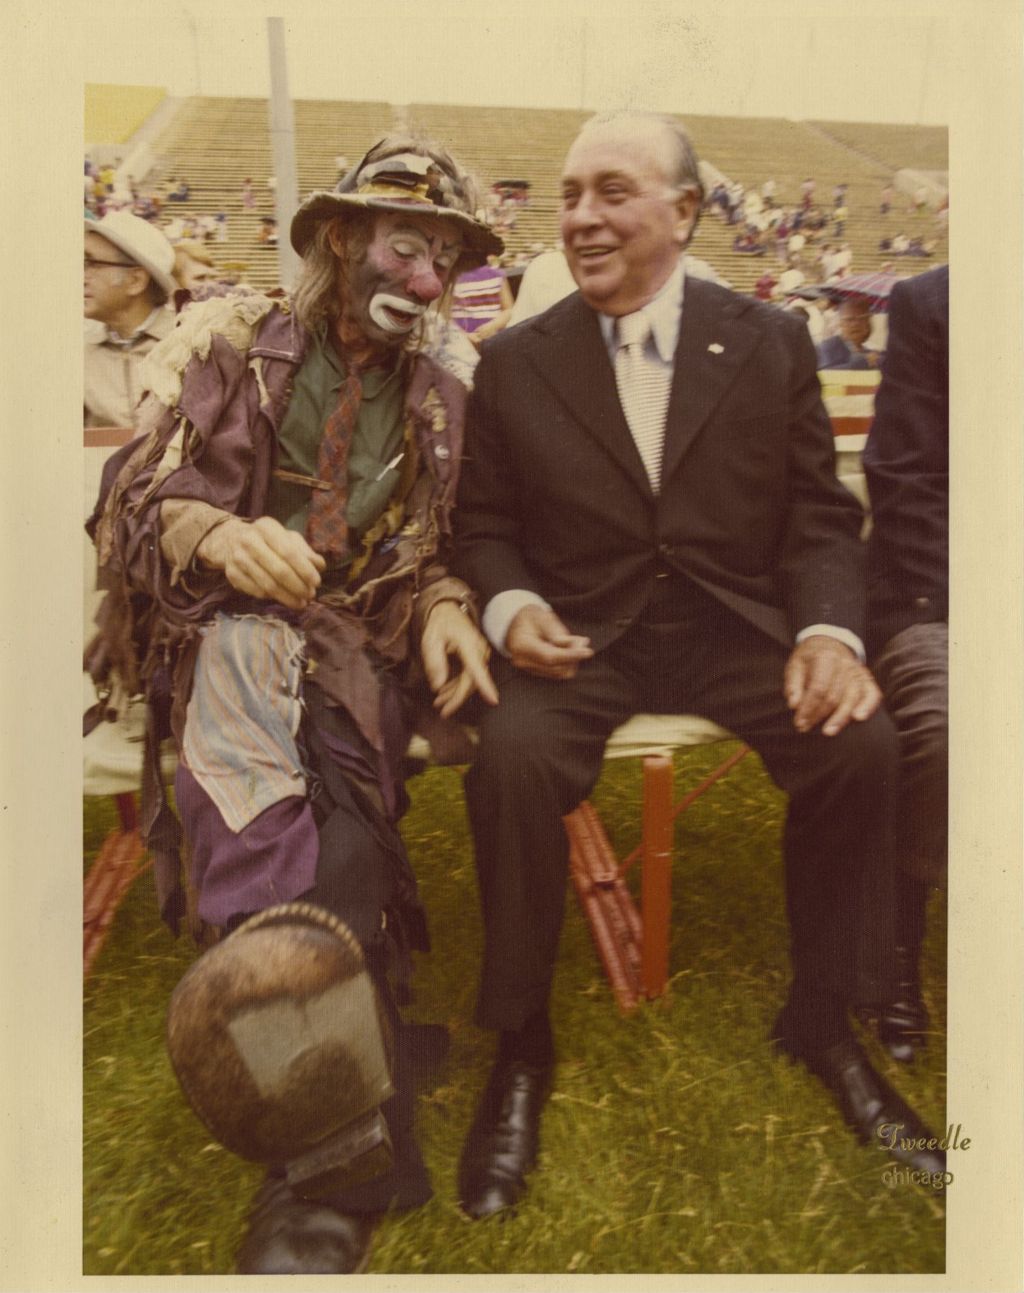 Miniature of Richard J. Daley sitting with clown Emmett Kelly